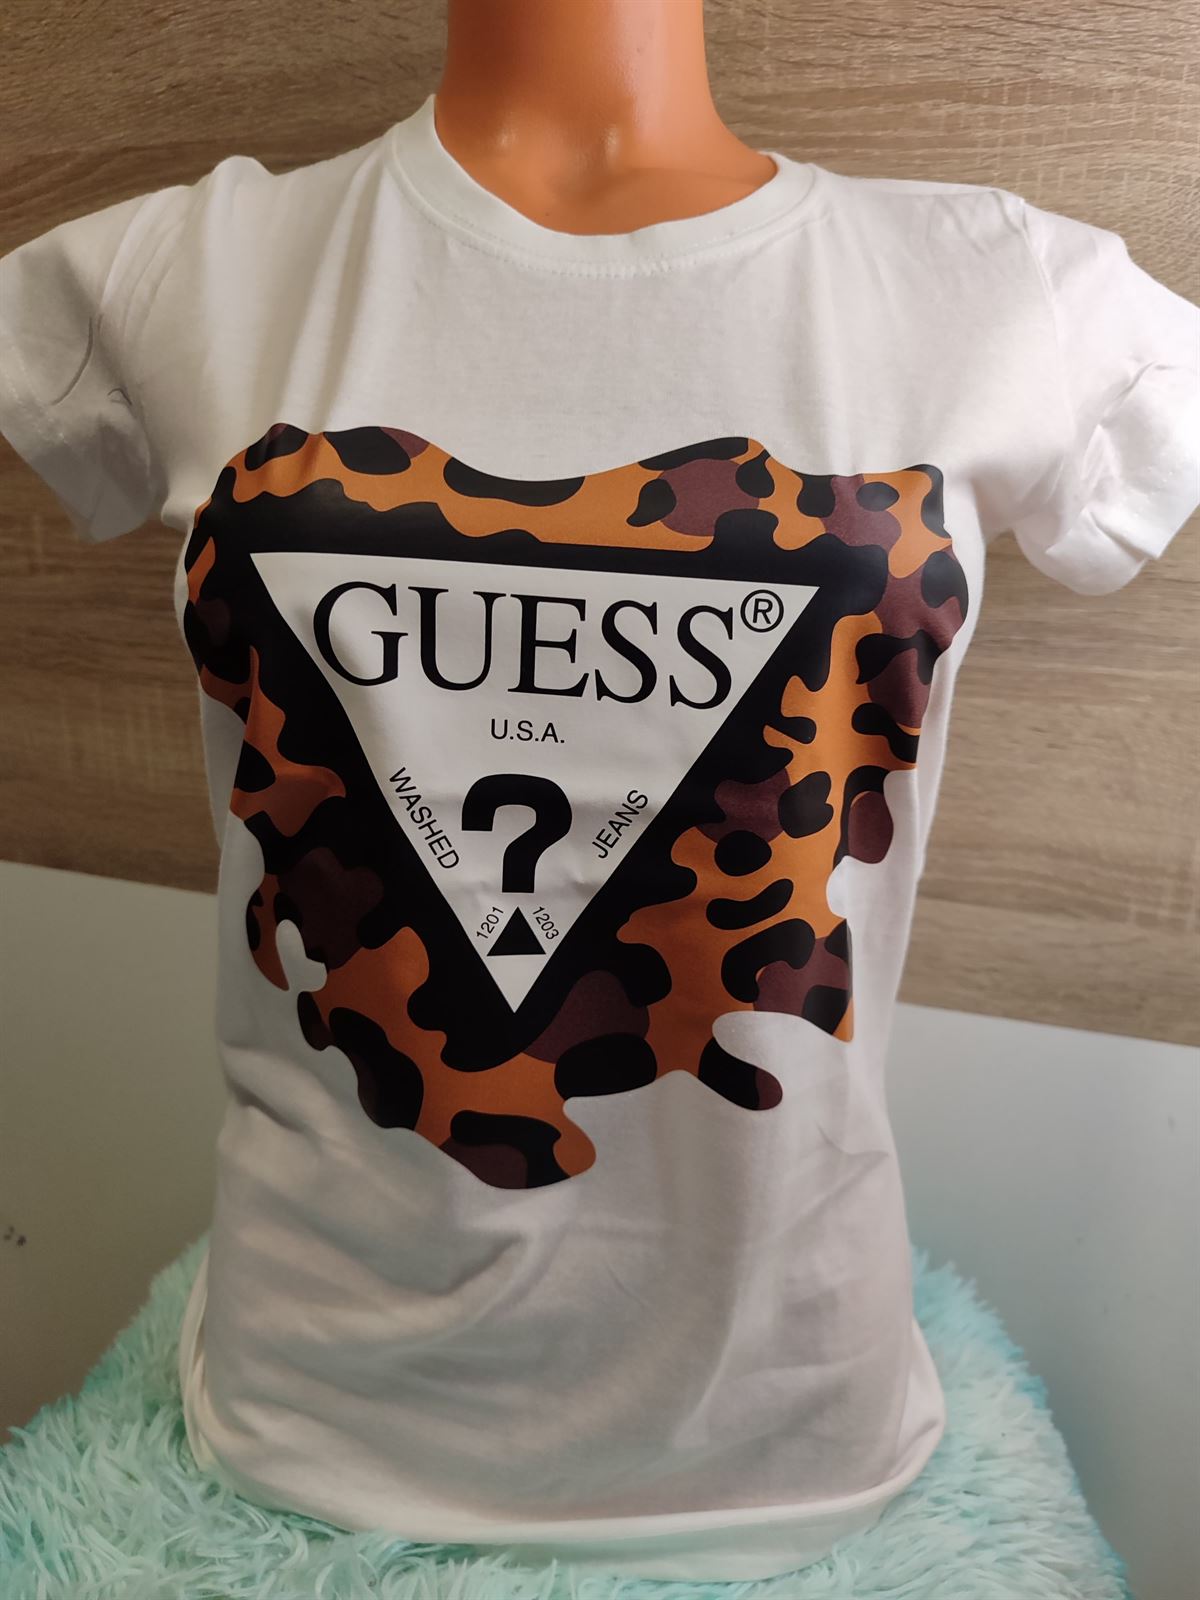 Camiseta Guess mujer - Imagen 1